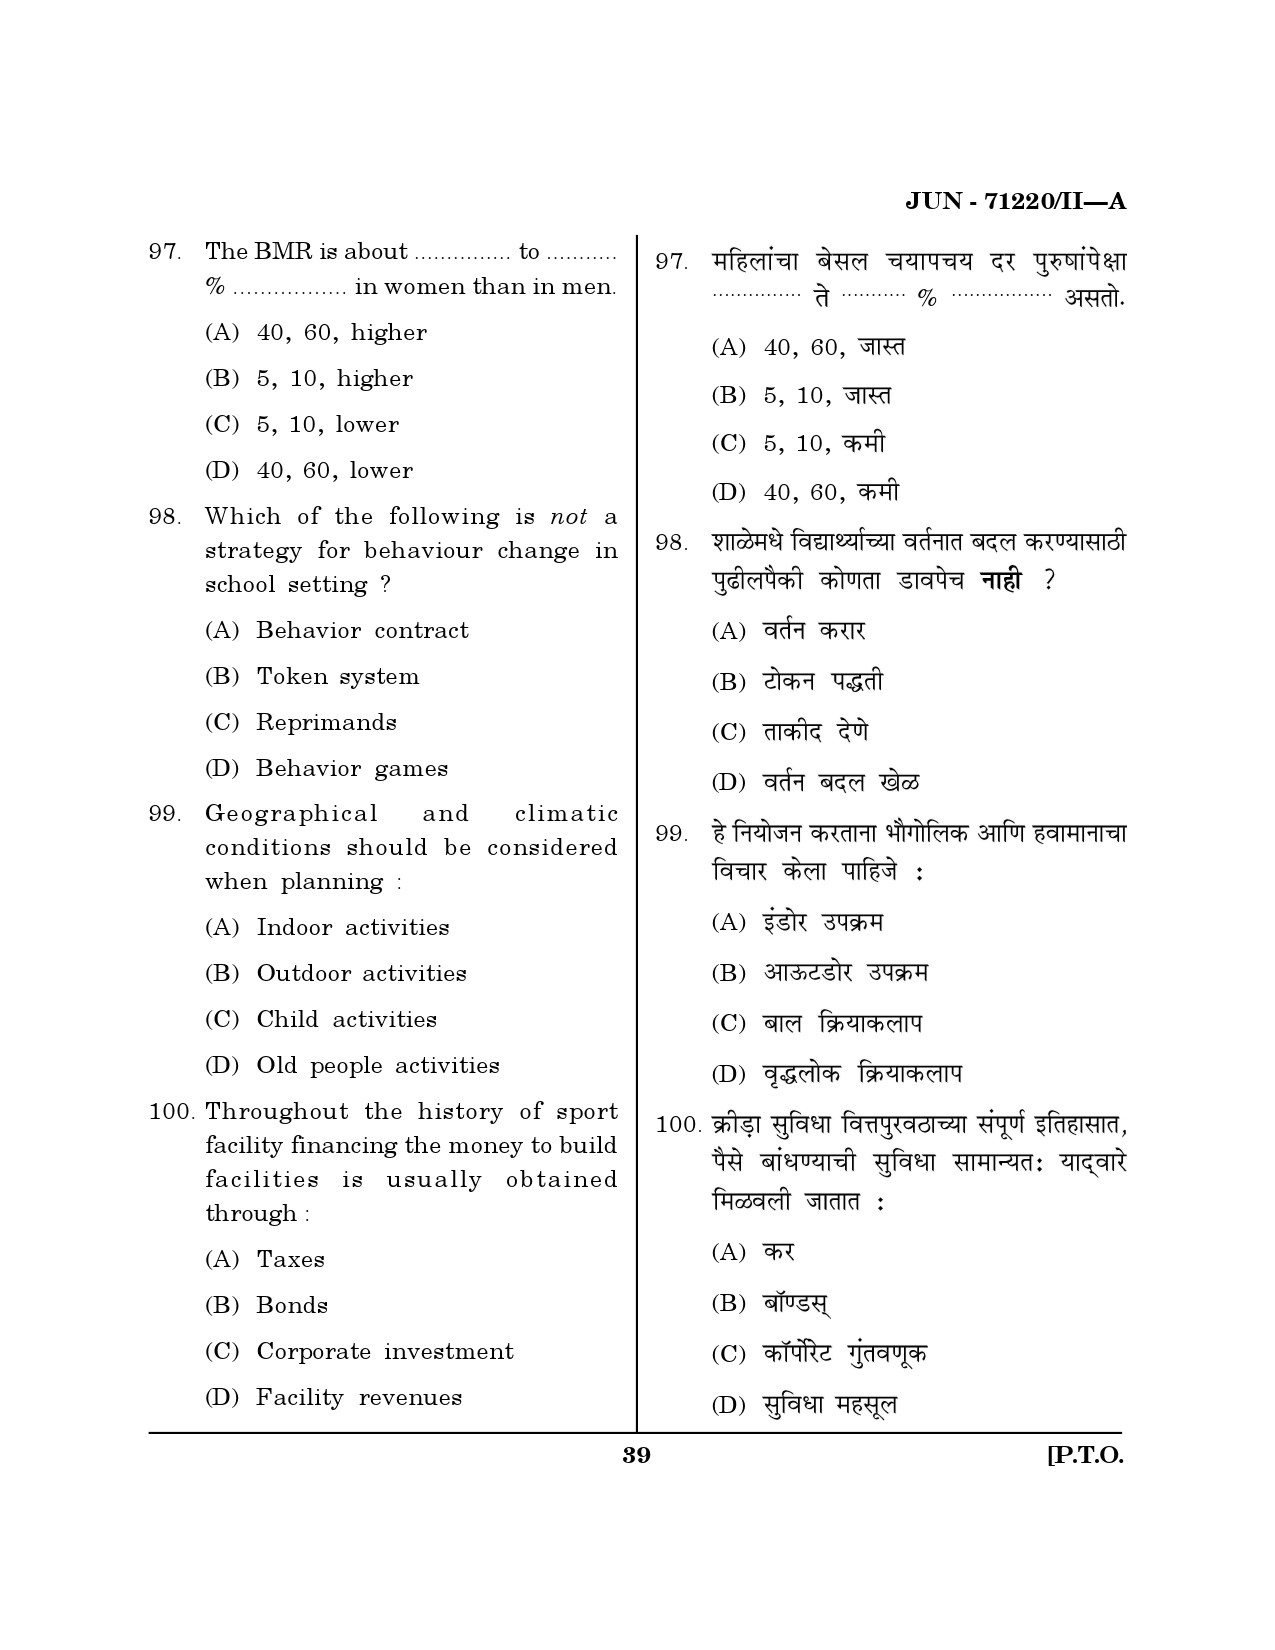 Maharashtra SET Physical Education Question Paper II June 2020 38